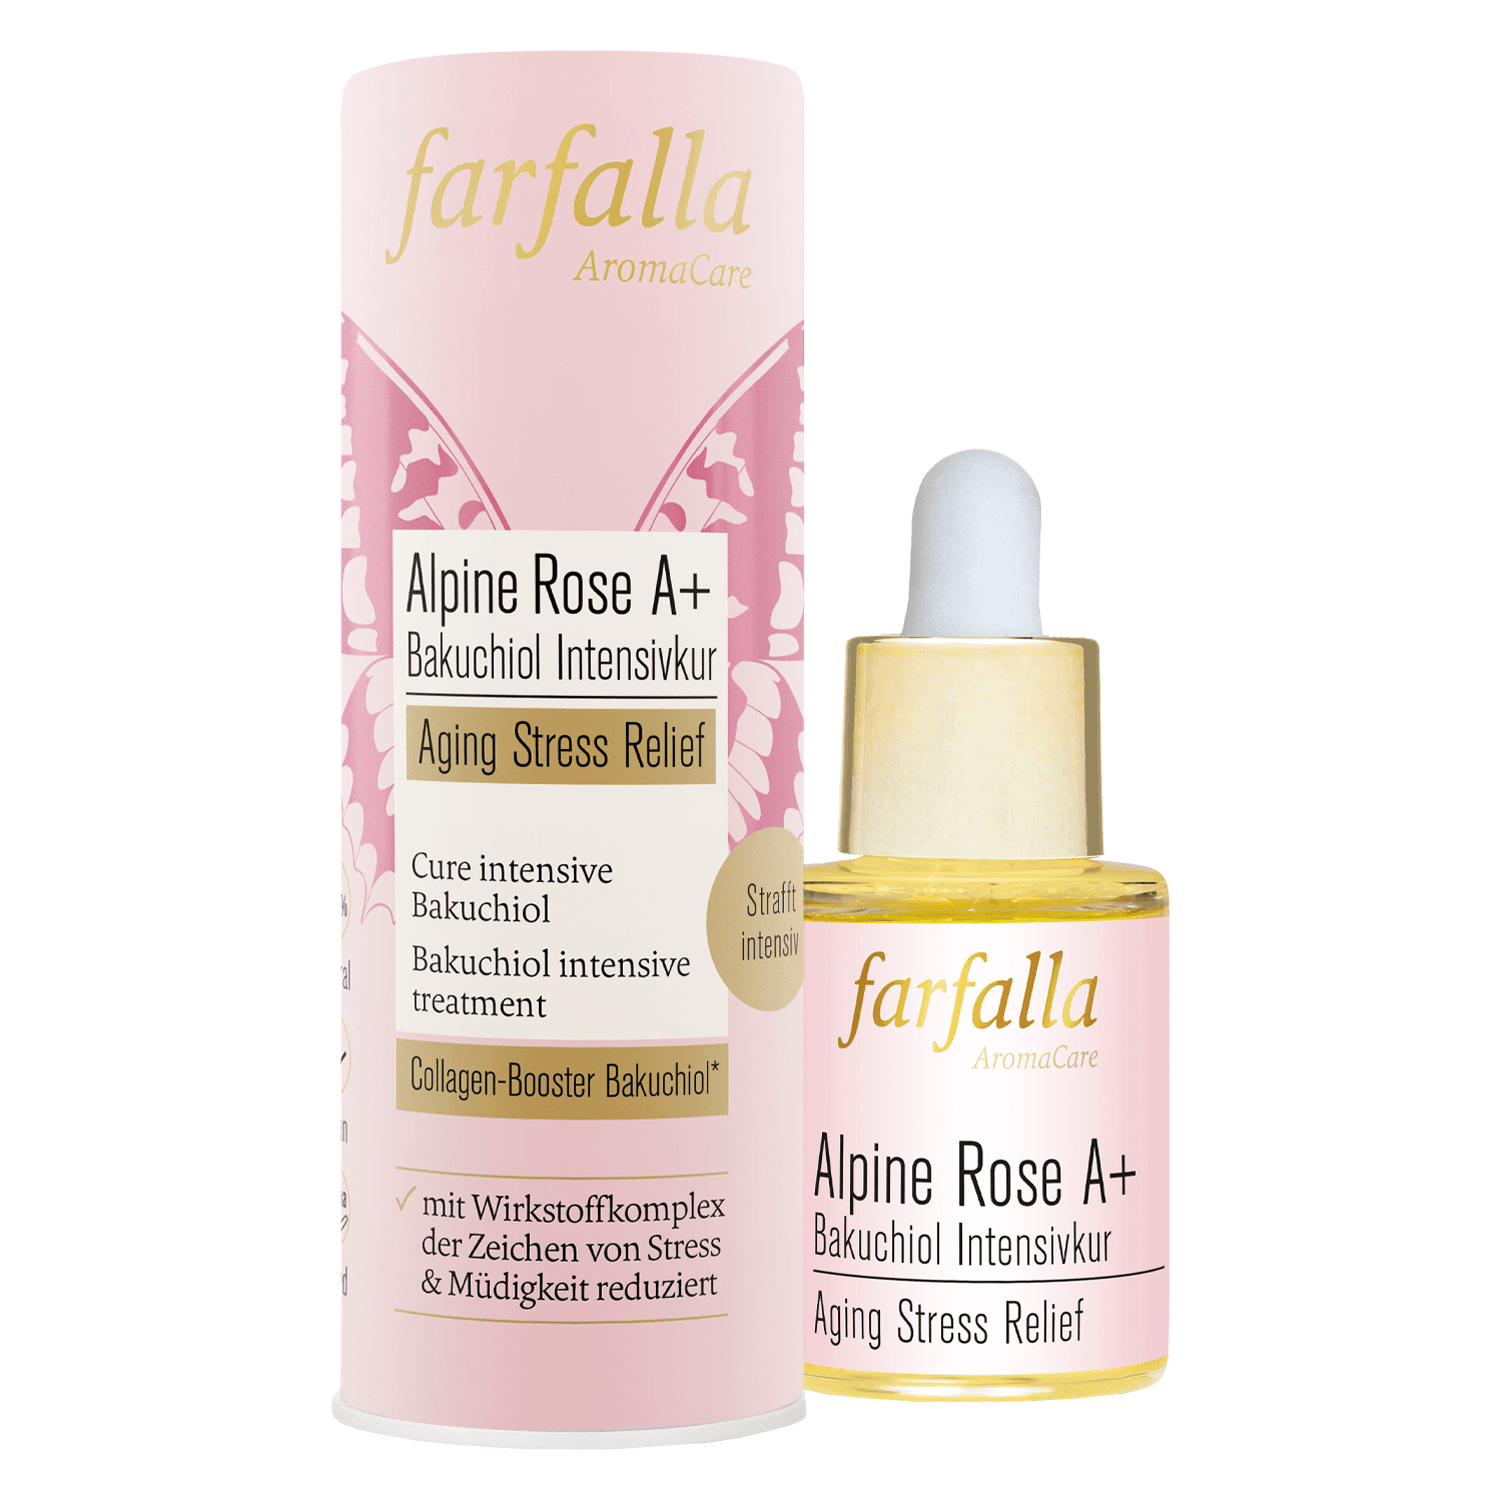 Farfalla Care - Alpine Rose A+ Bakuchiol Intensive Treatment